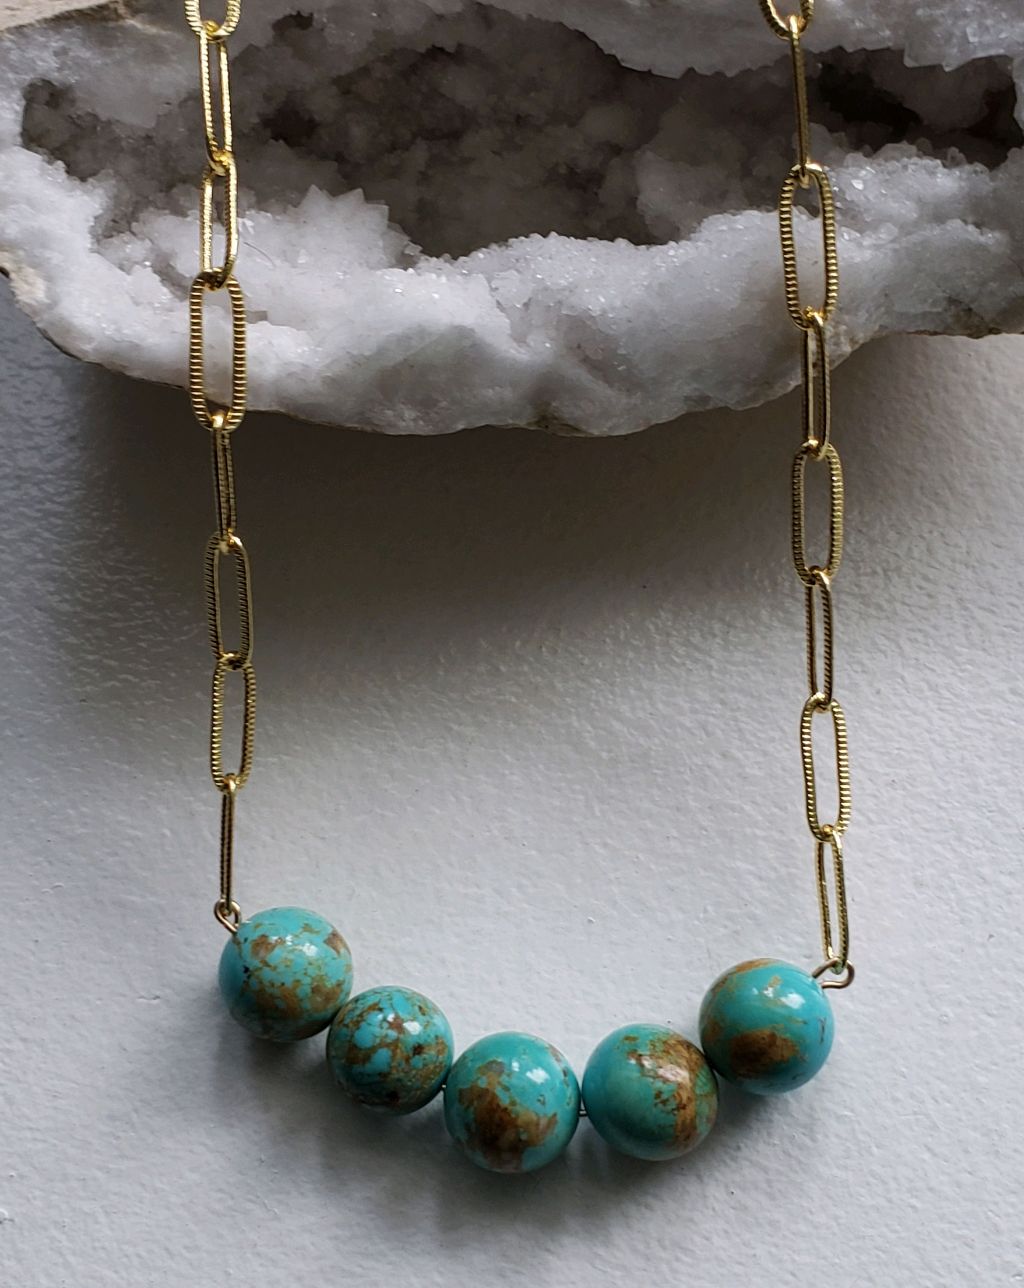 Stunning 13 mm Turquoise beads, GF paperclip chain choker